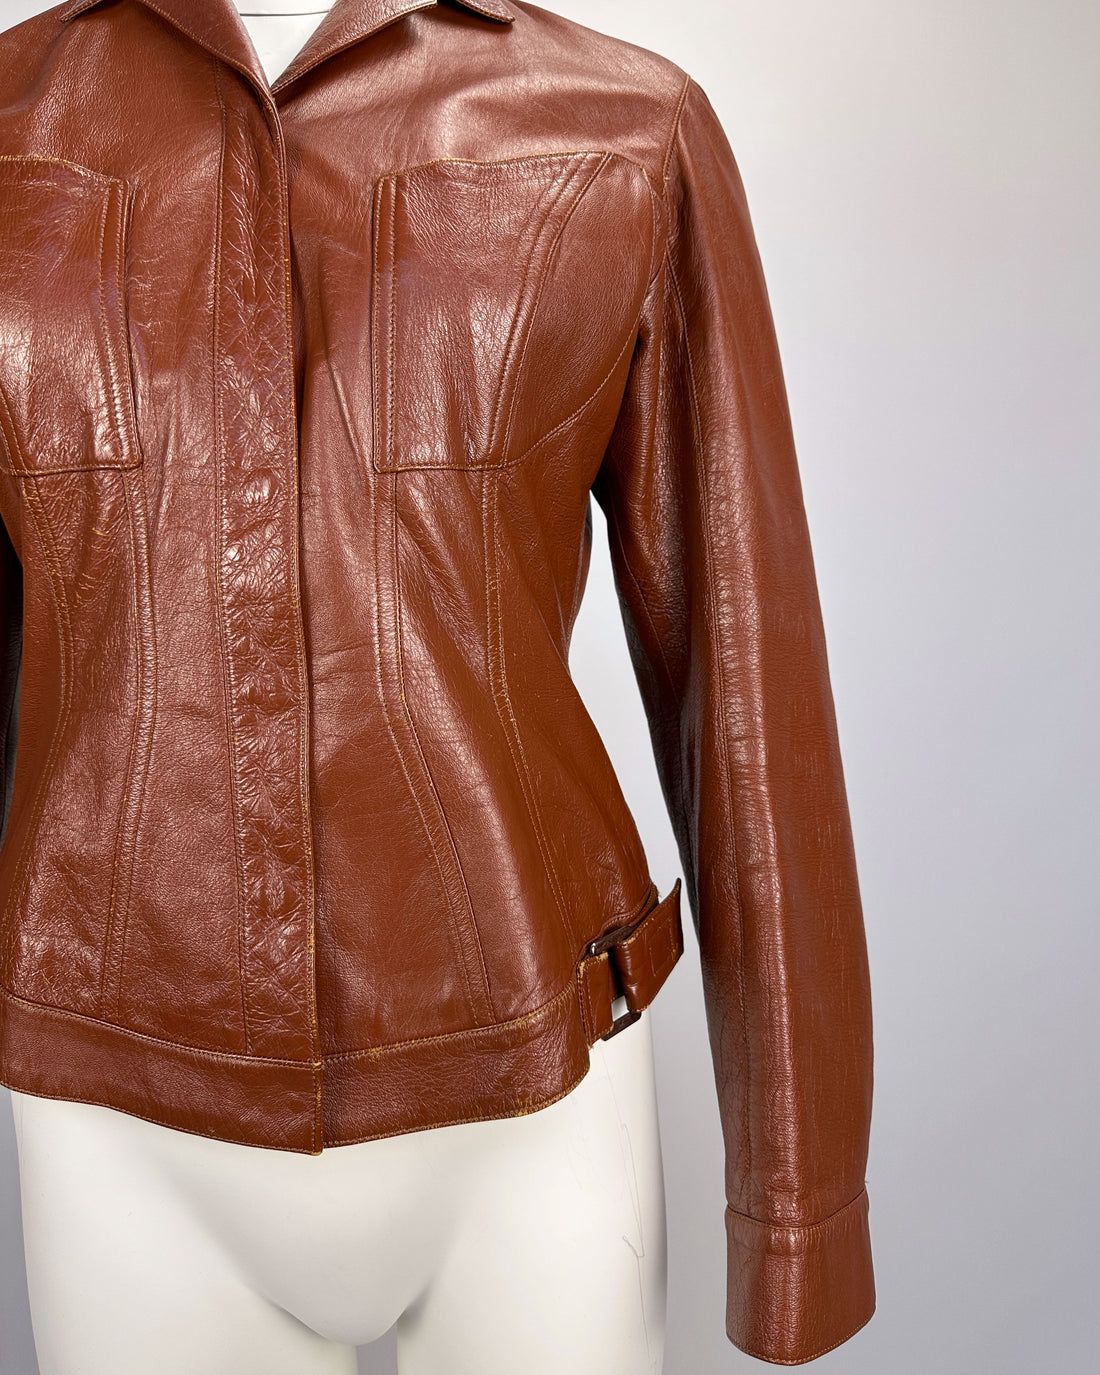 Mugler Symmetric Brown Leather Jacket 2000's